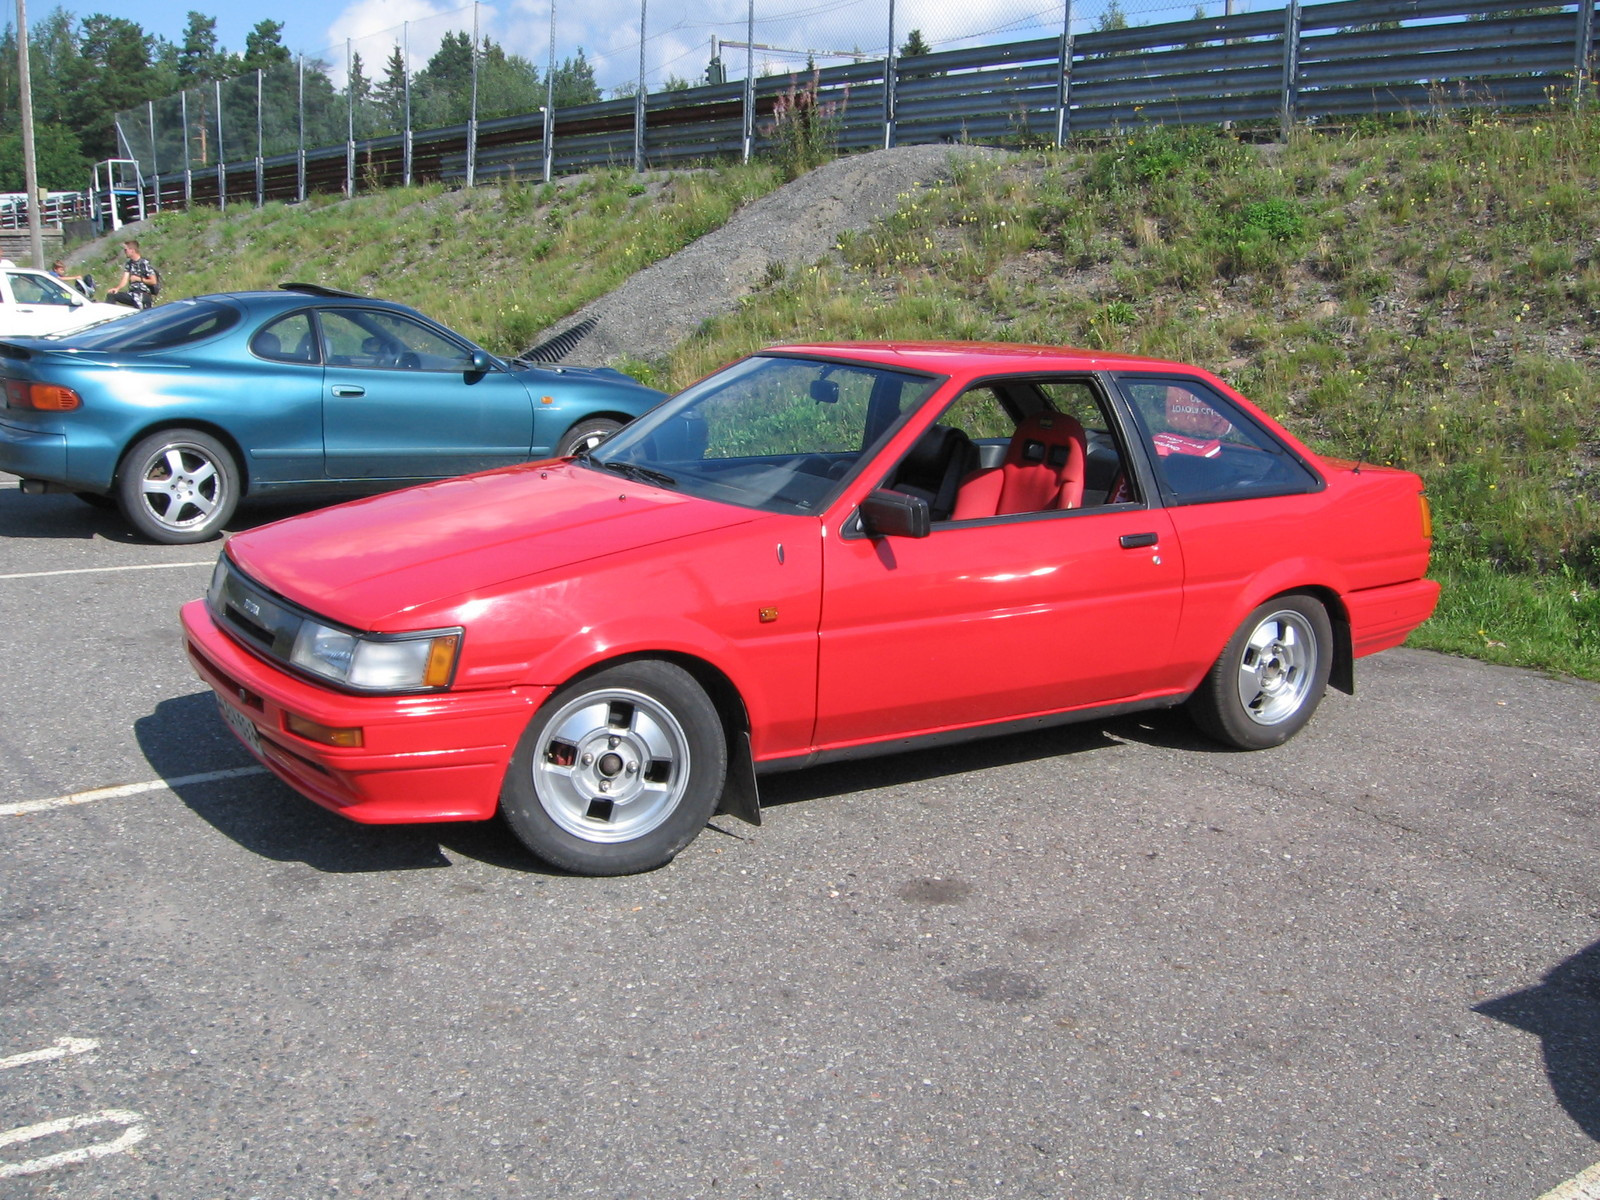 Fintoys ratapÃ¤ivÃ¤ 4.8.2007 Ahvenisto, Toyota Corolla GT AE86, punainen